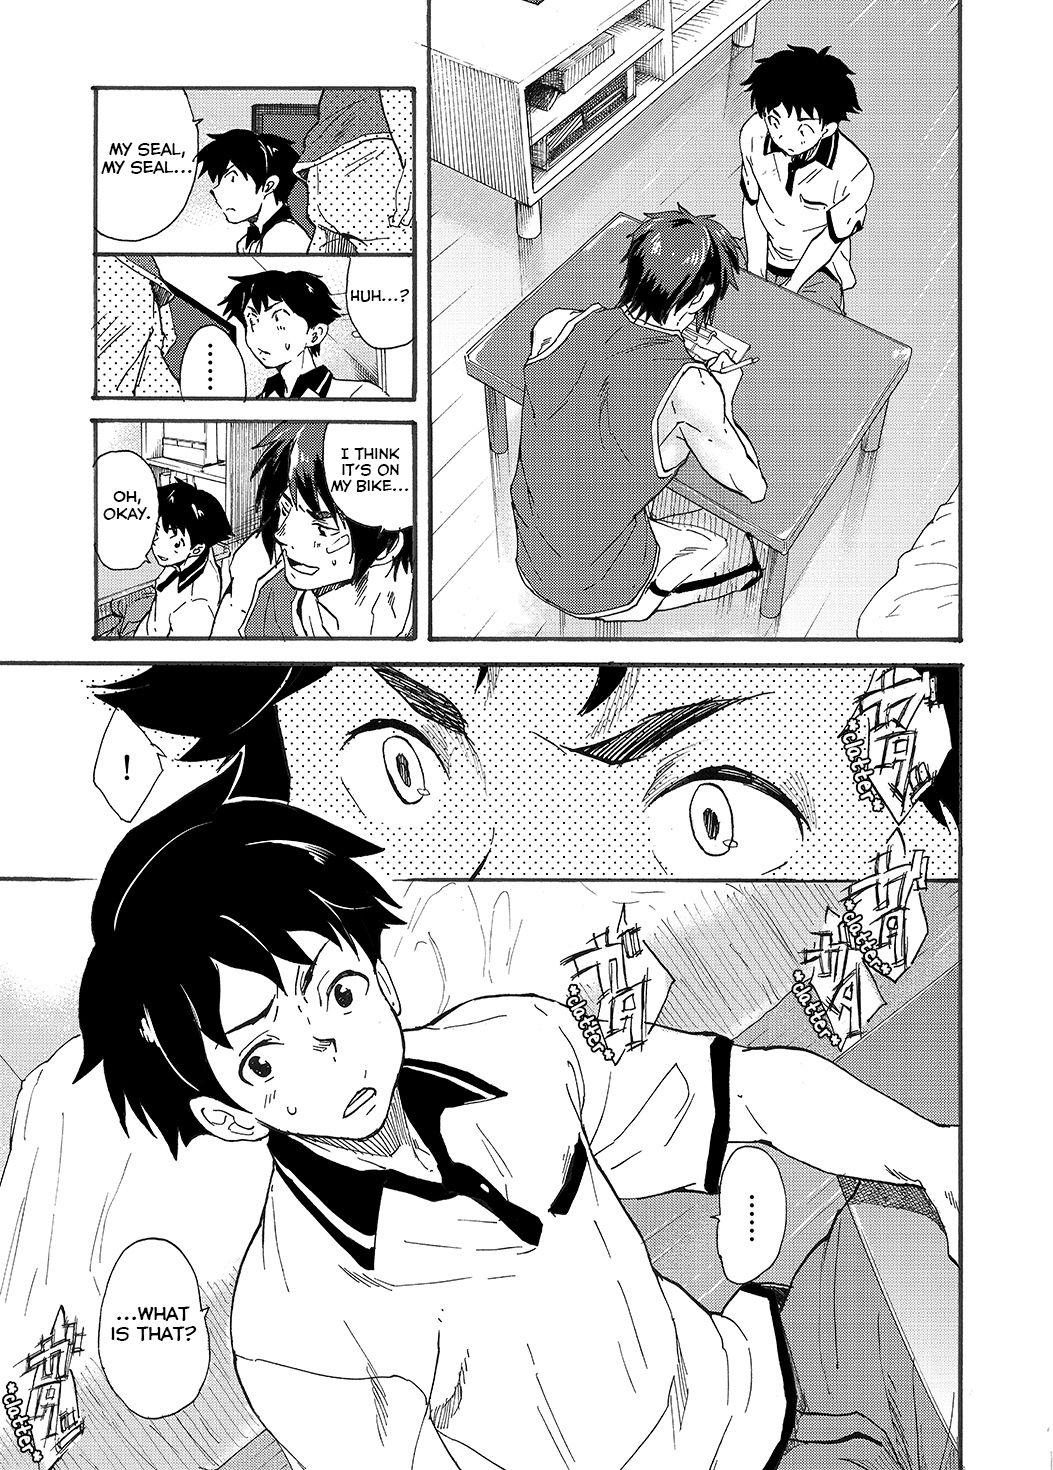 Style Machikado "Hitotsubashi Arata" - Original Extreme - Page 7